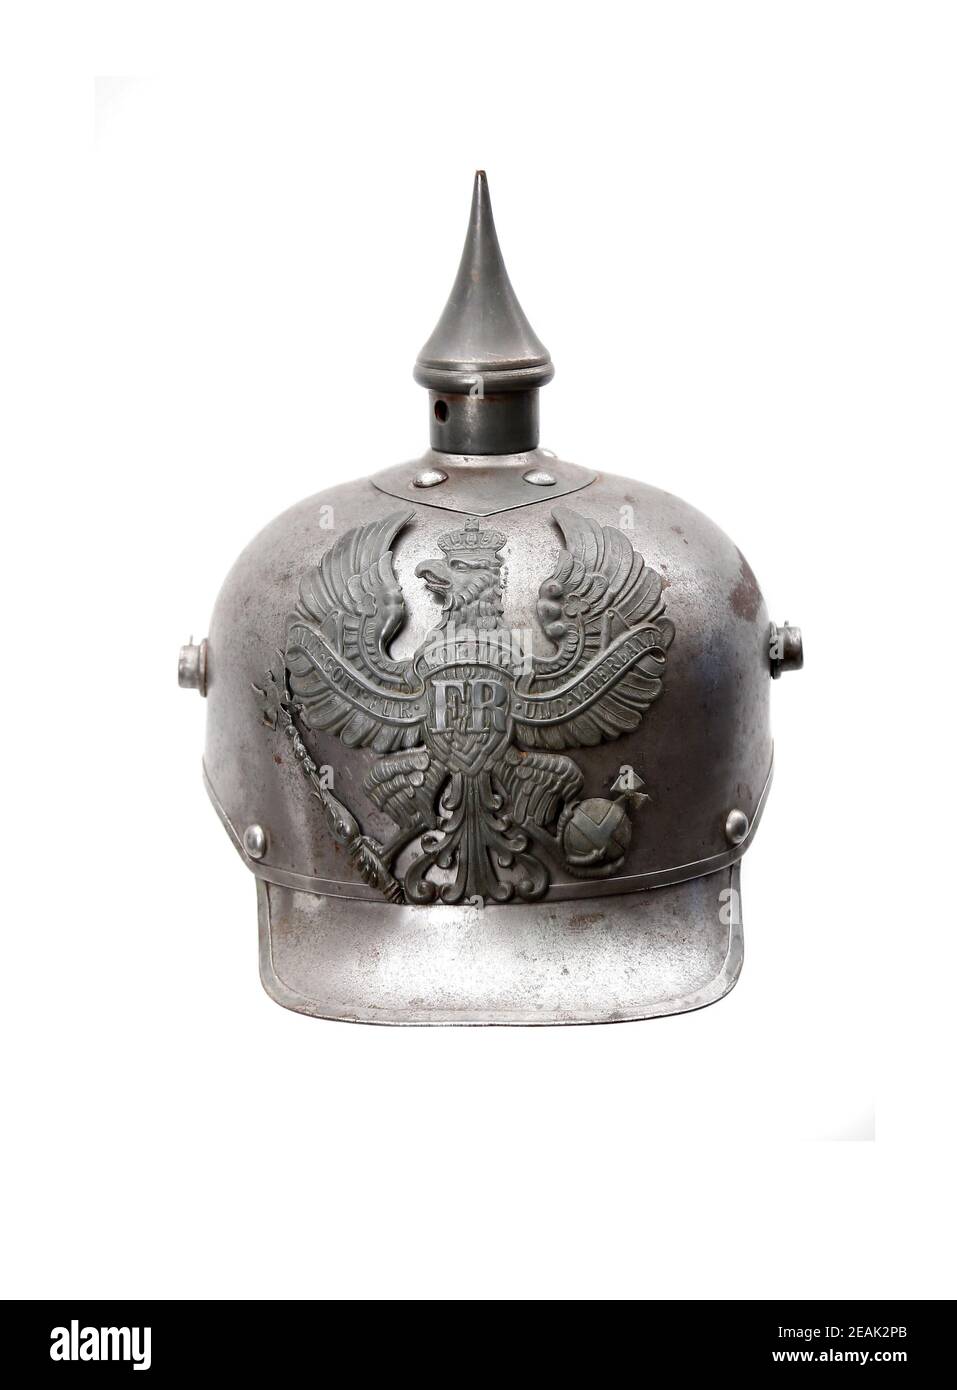 Línea de Prusia (Kurassier cuirassiers) casco de acero. Siglo xix. Alemania Foto de stock